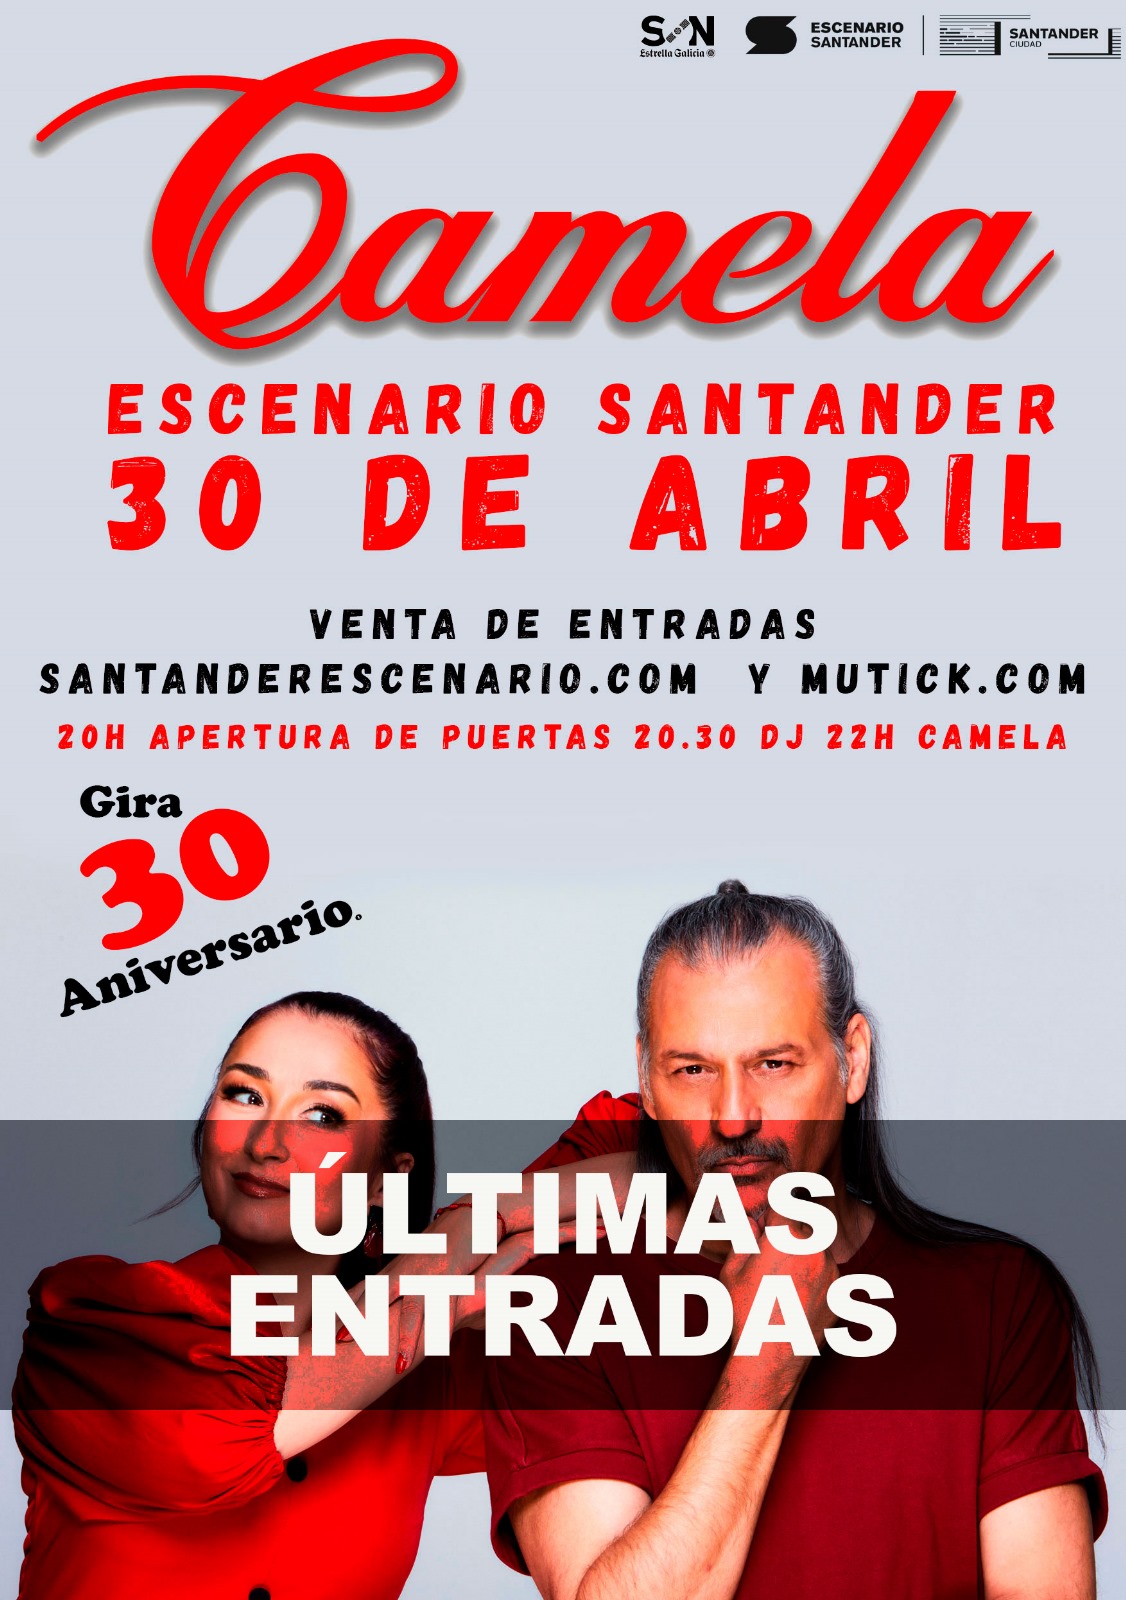 CAMELA en Escenario Santander - Cantabria - AGOTADAS - Mutick